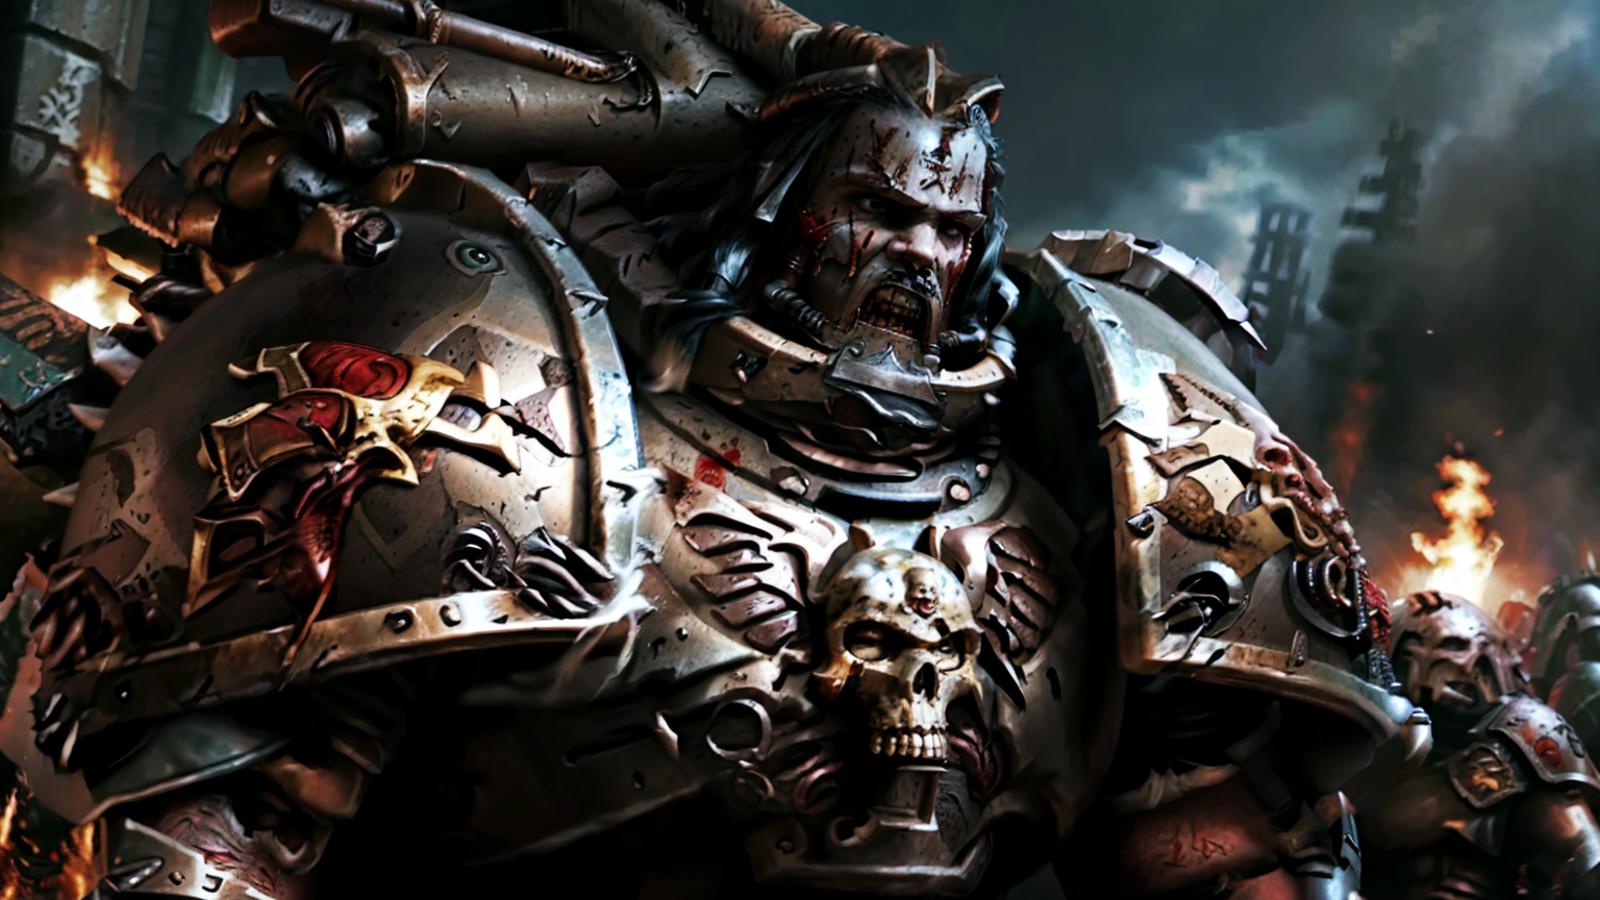 Warhammer 40,000 - Addon for SPYBG's Toolkit image by rklaffehn